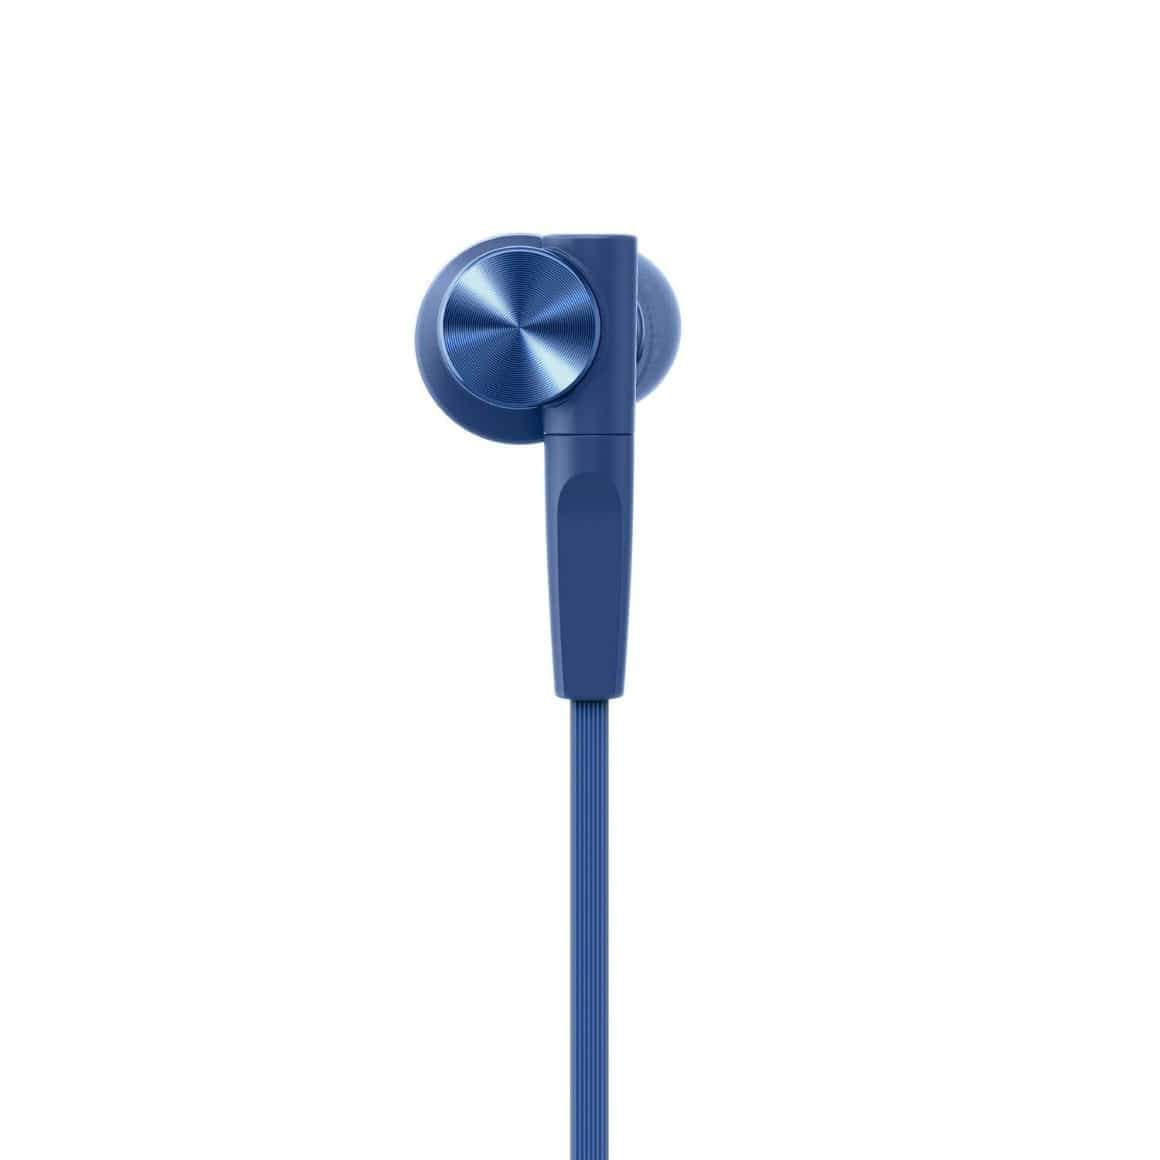 sony-mdr-xb55ap-blue-headphone-zone